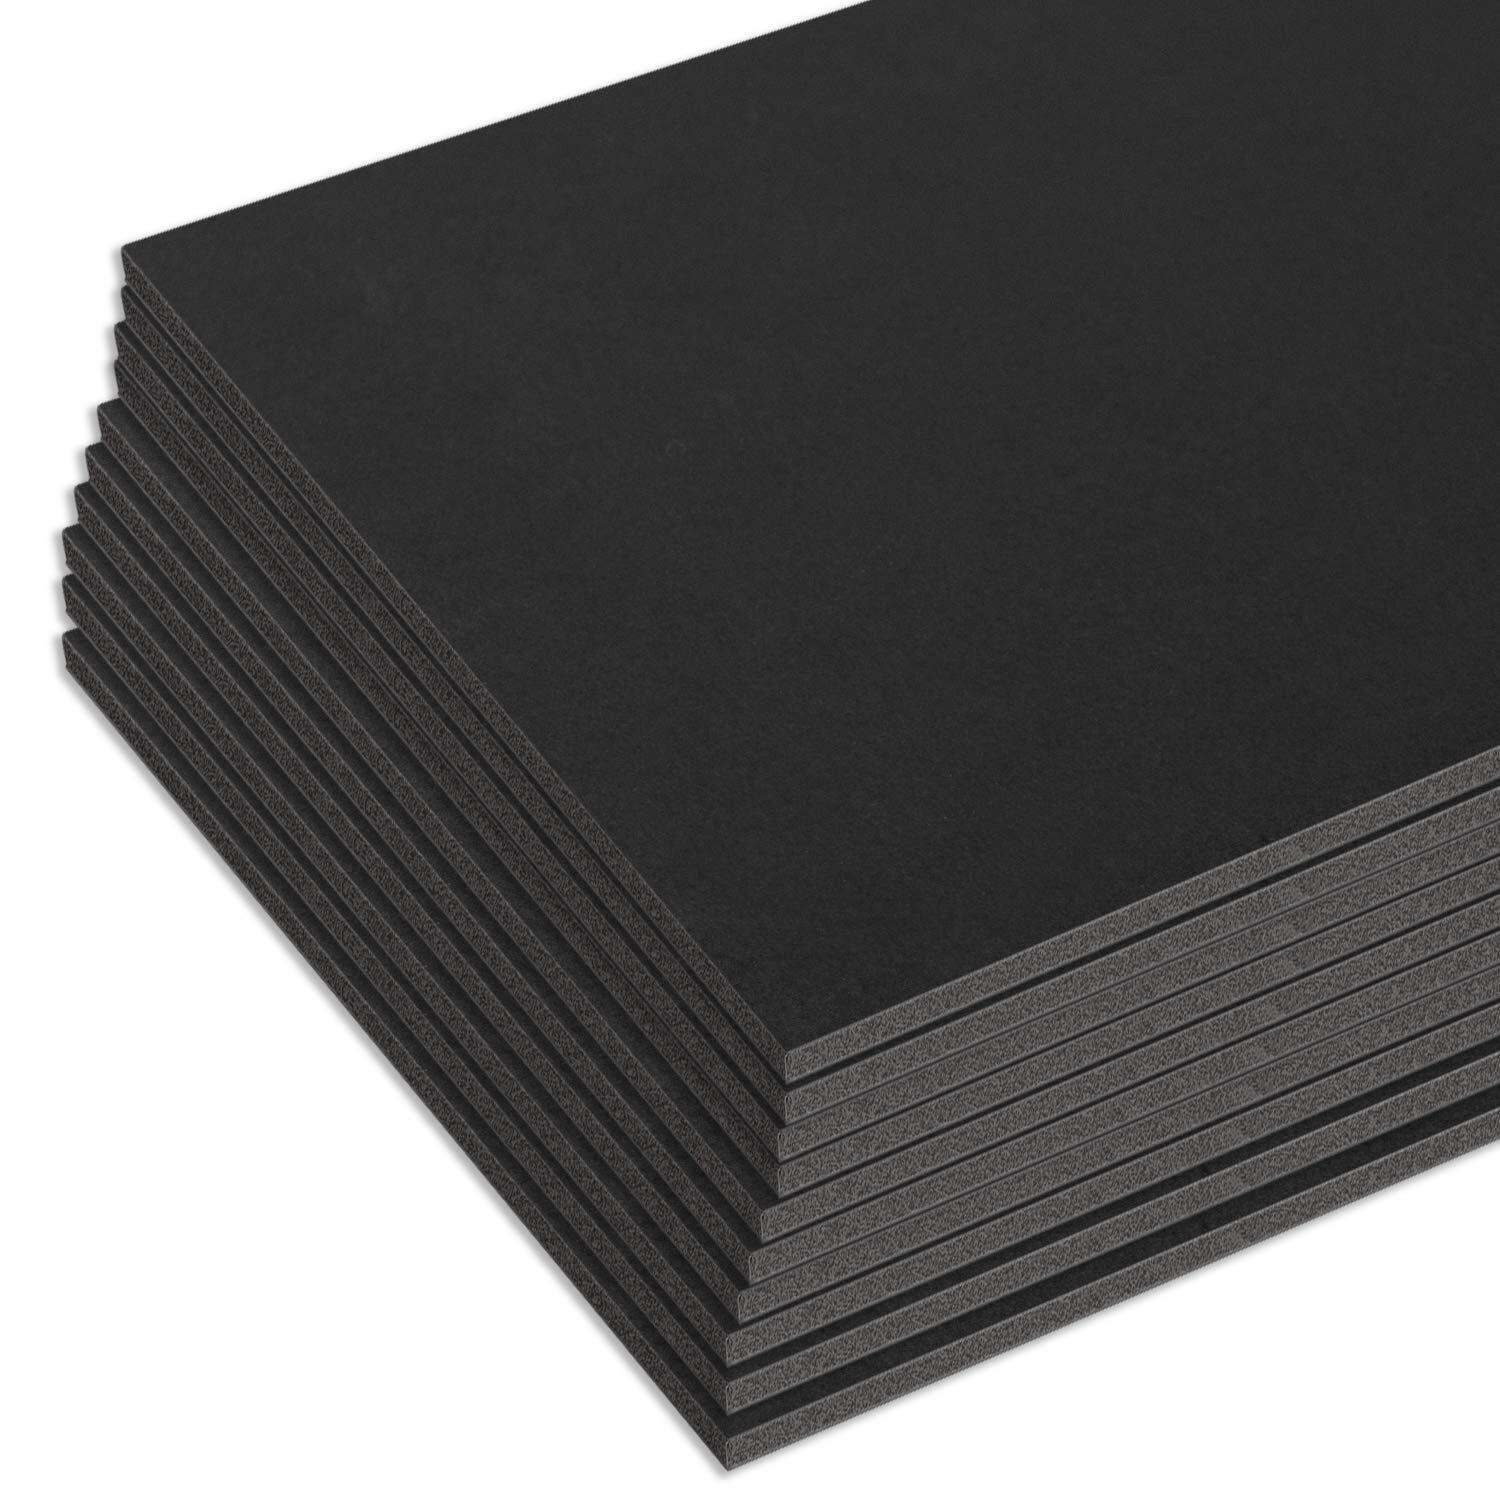 Mat Board Center, Pack Of 25 Foam Core Backing Boards 3/16" (11x14, Black)